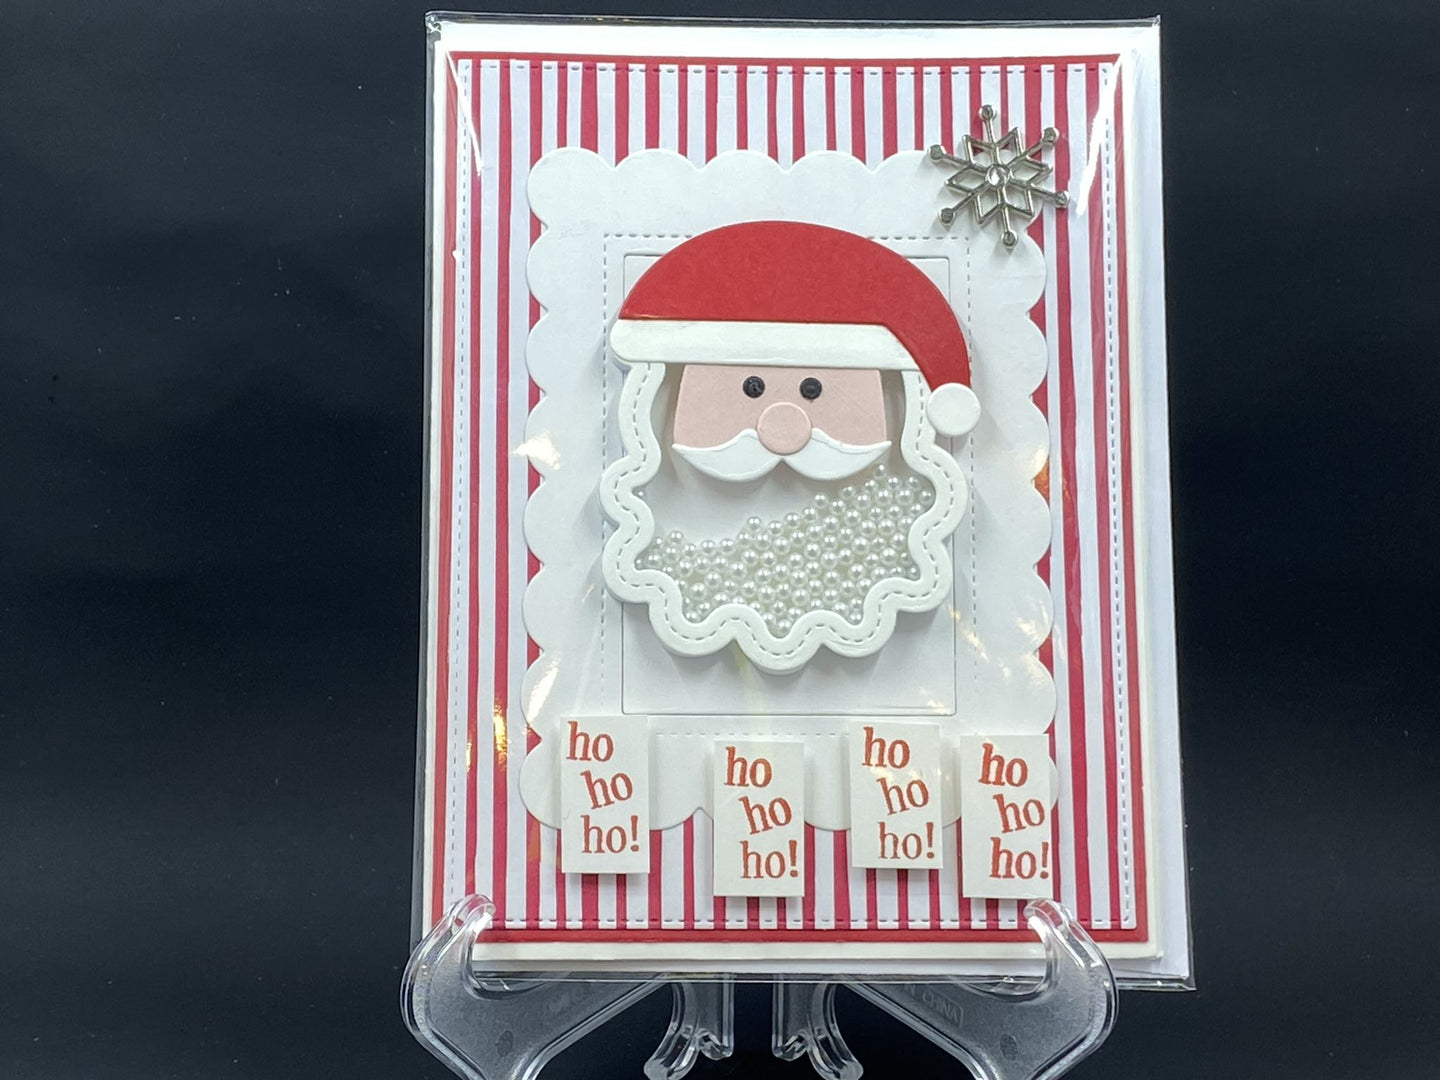 Ho Ho Ho! - Santa Claus Confetti